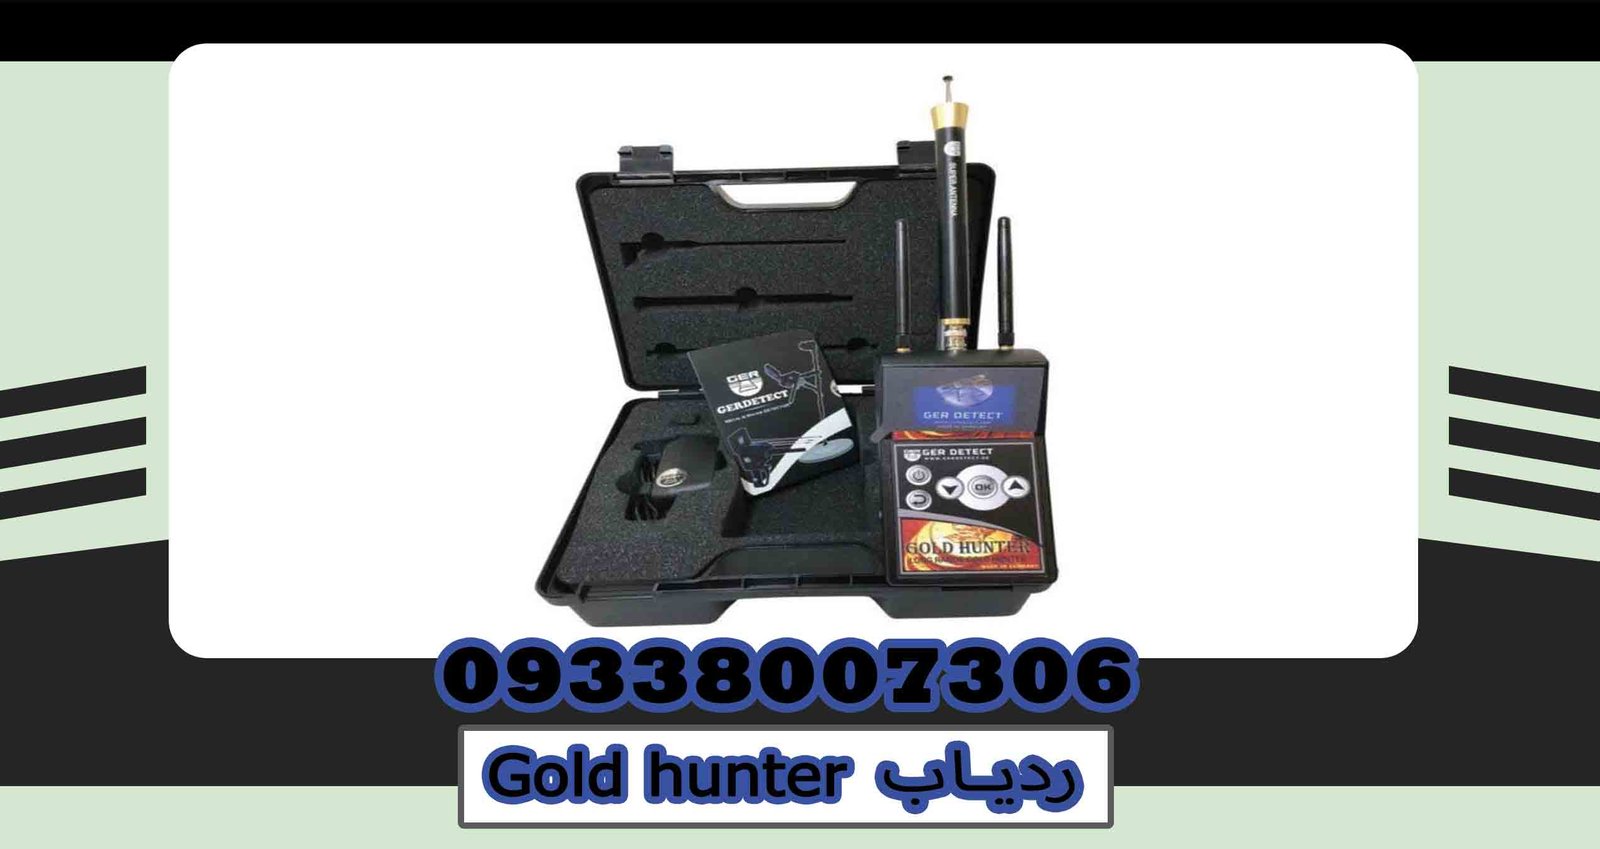 Gold-hunter.8398